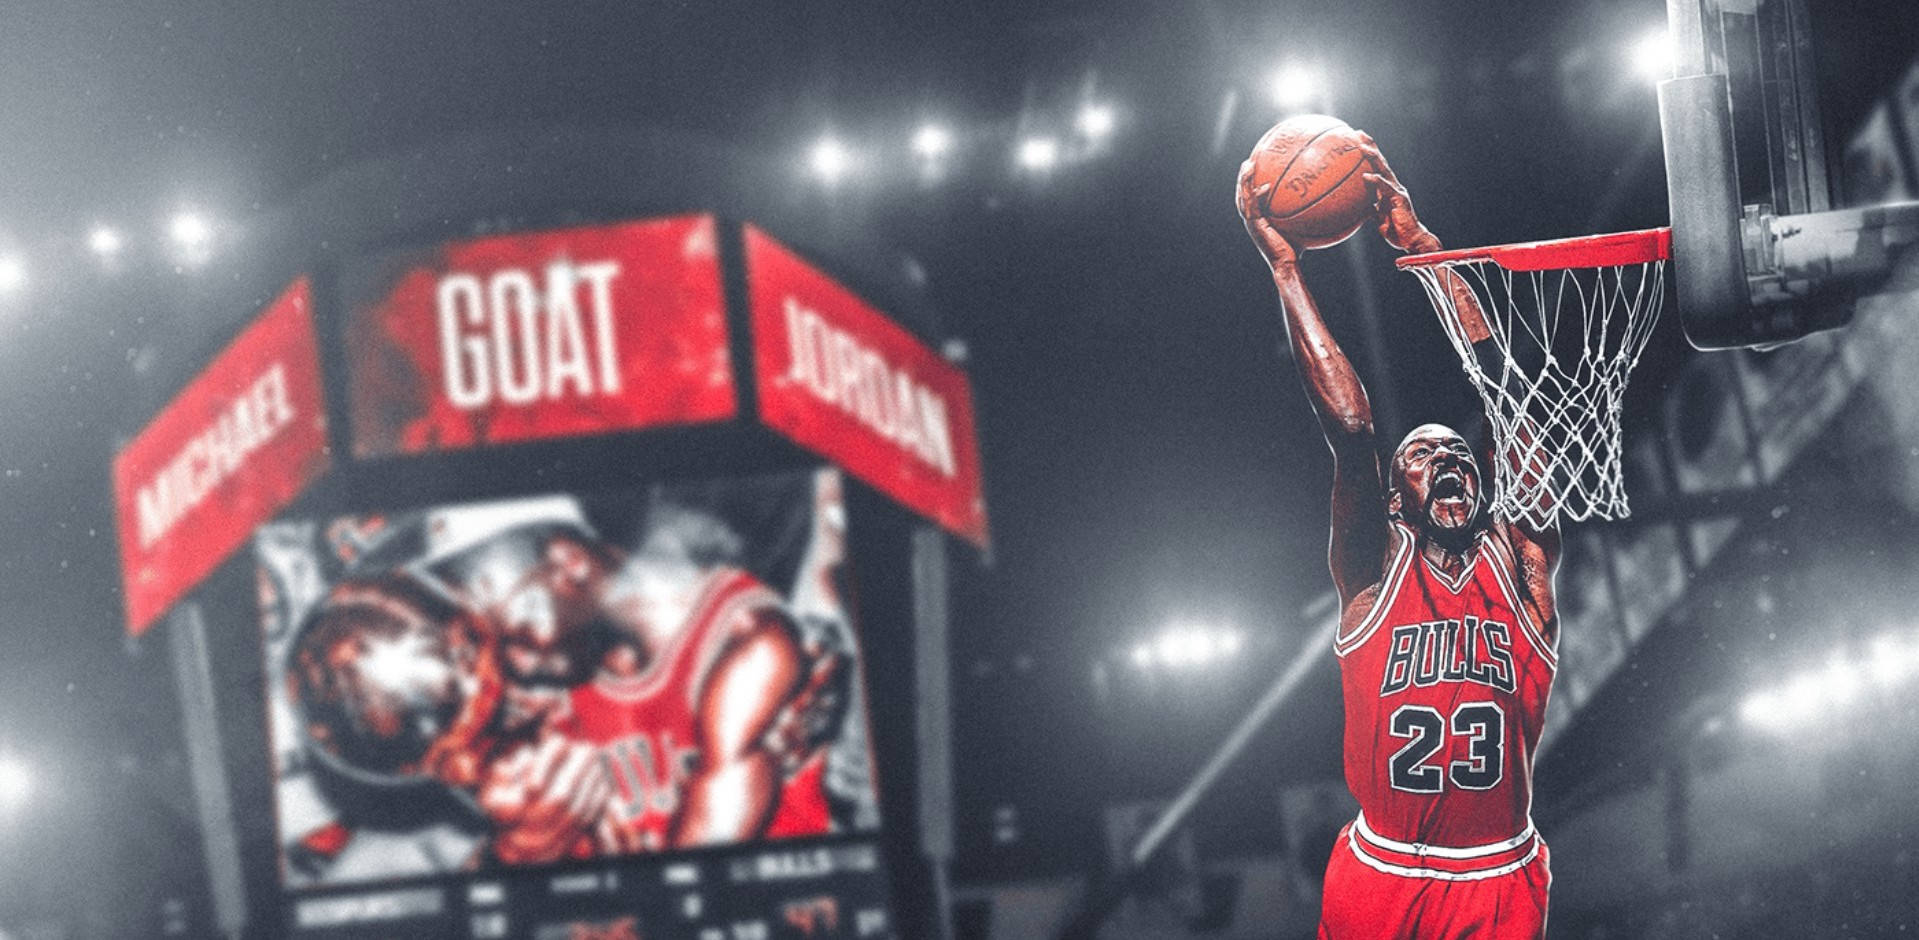 Cool Michael Jordan Basketball Moment Background